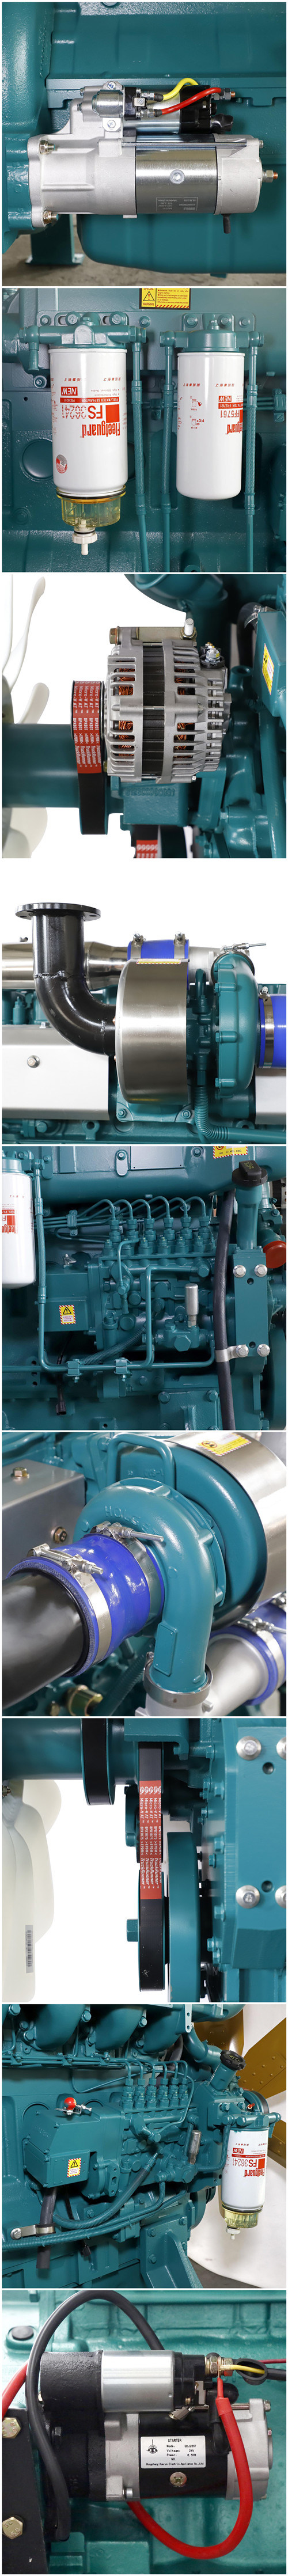 Color Custom Diesel Engine for Generator Set Electric Power